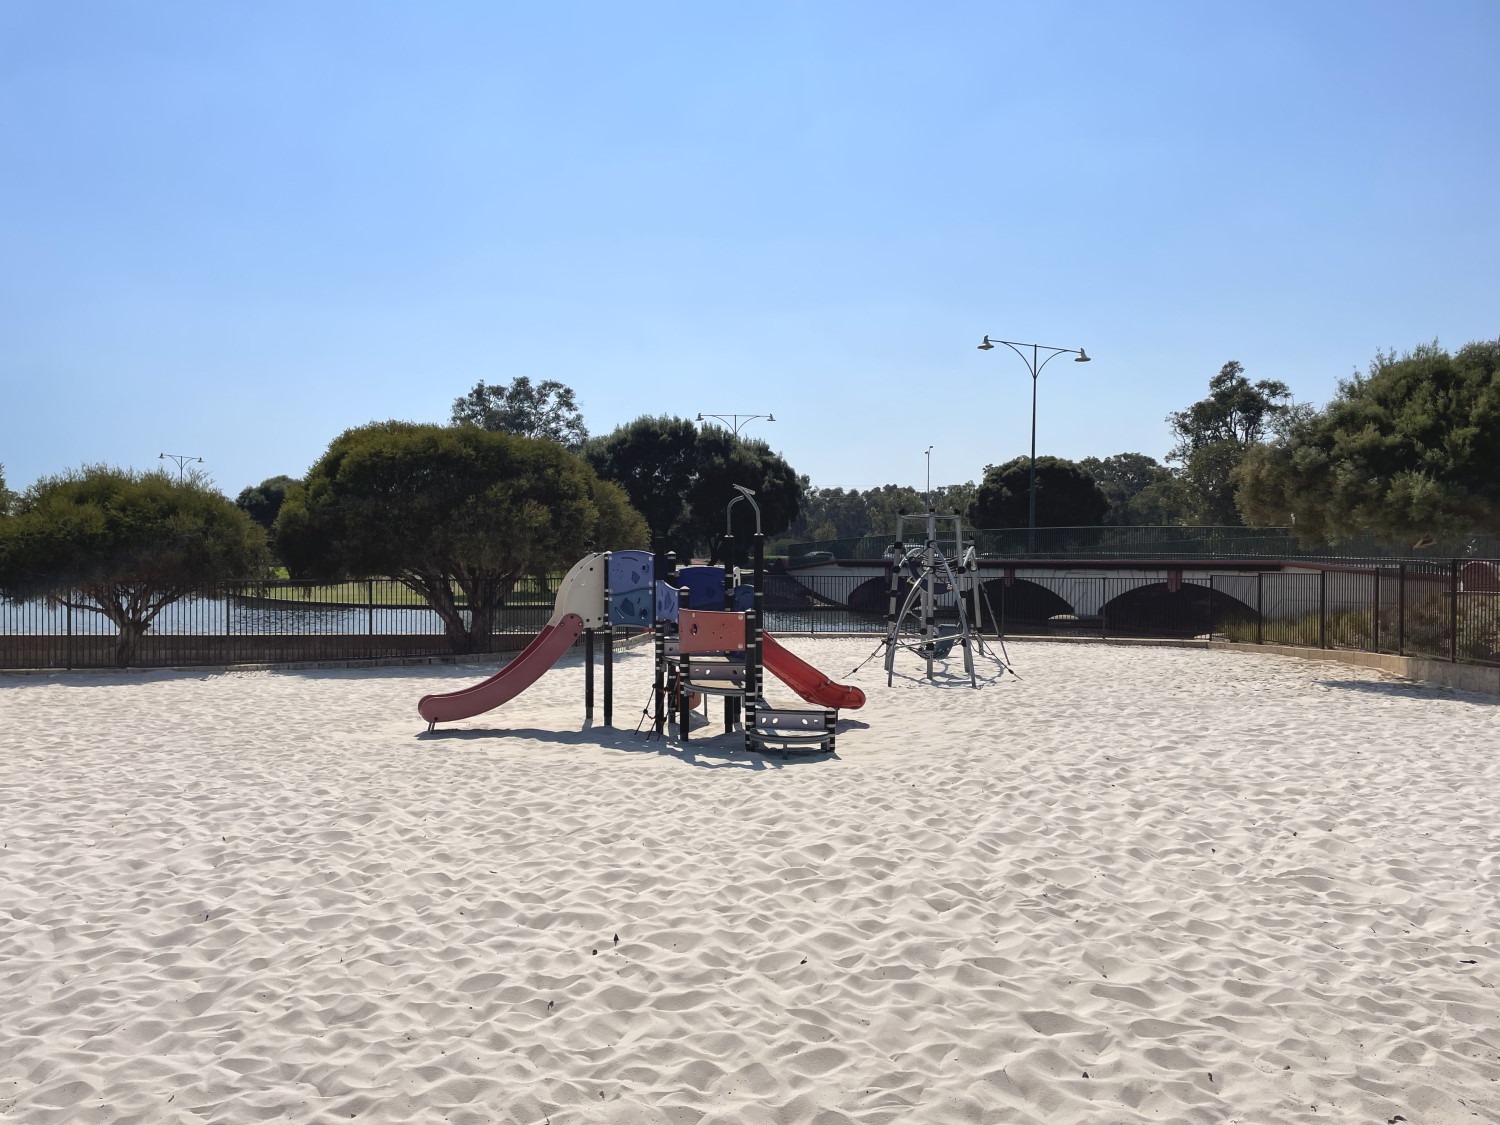 Treendale-Park-Playground-LR.jpg